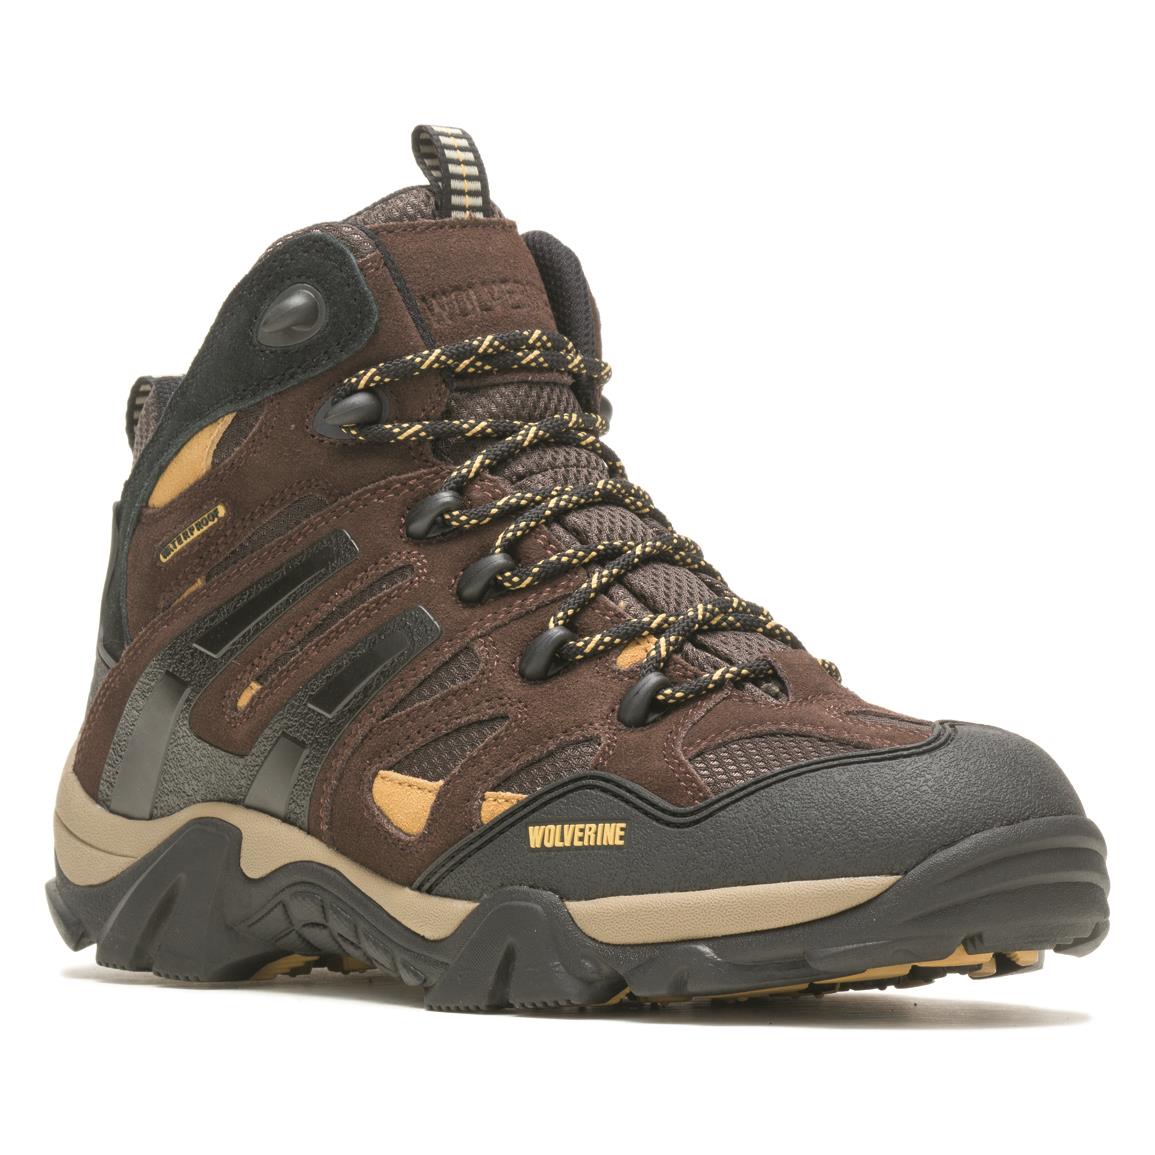 Wolverine Men's Wilderness Waterproof Hiking Boots, Chocolate Brown